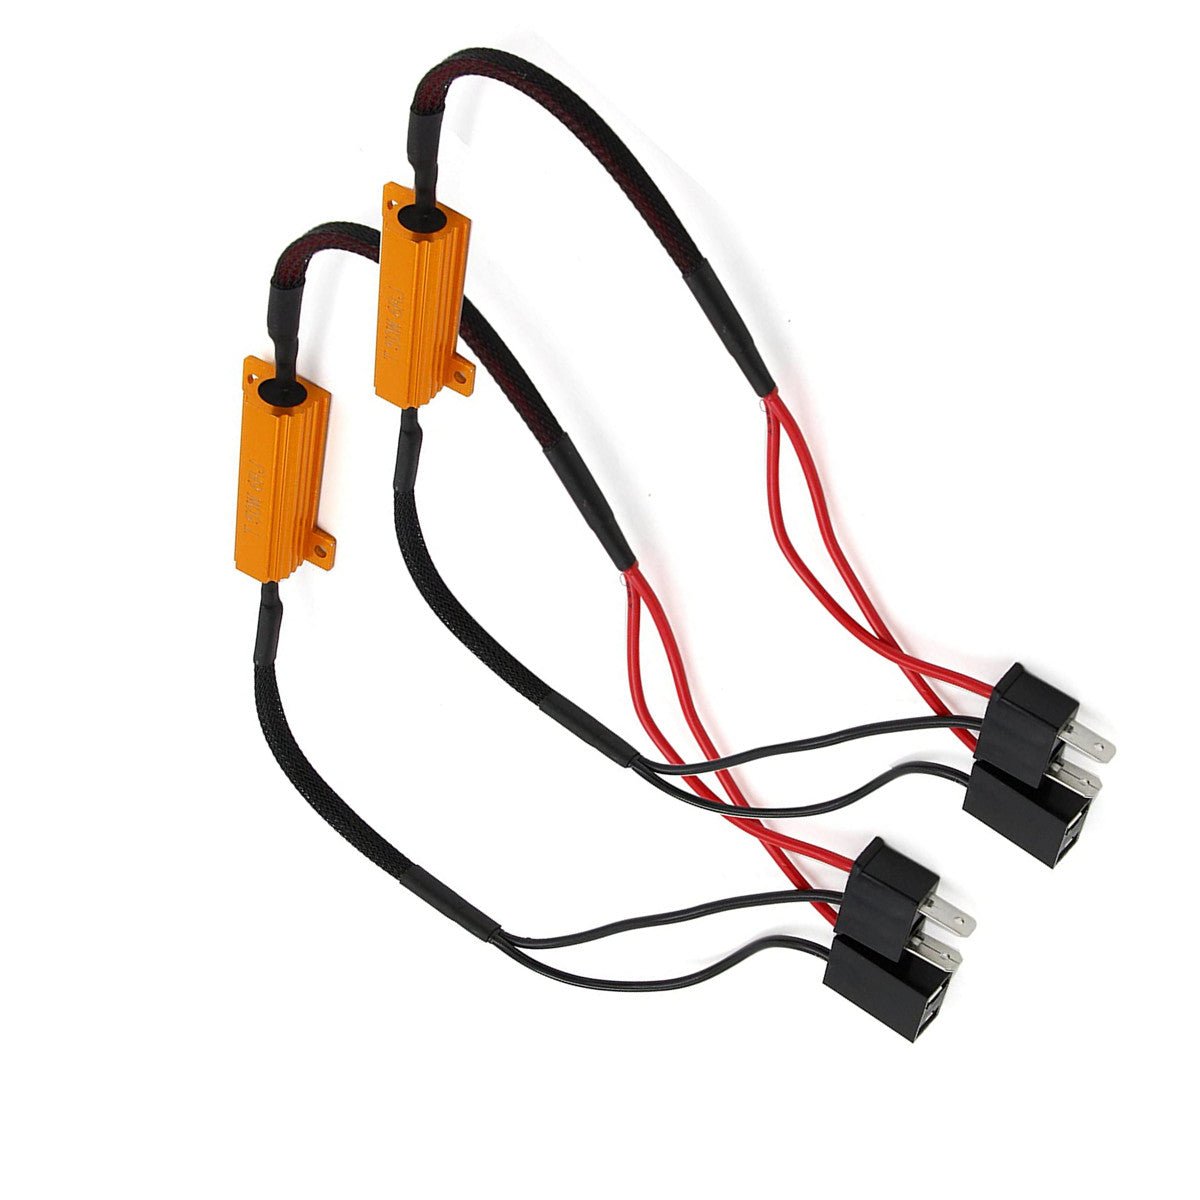 Resistor for H7 LED Car bulbs, (6 ohm resistance